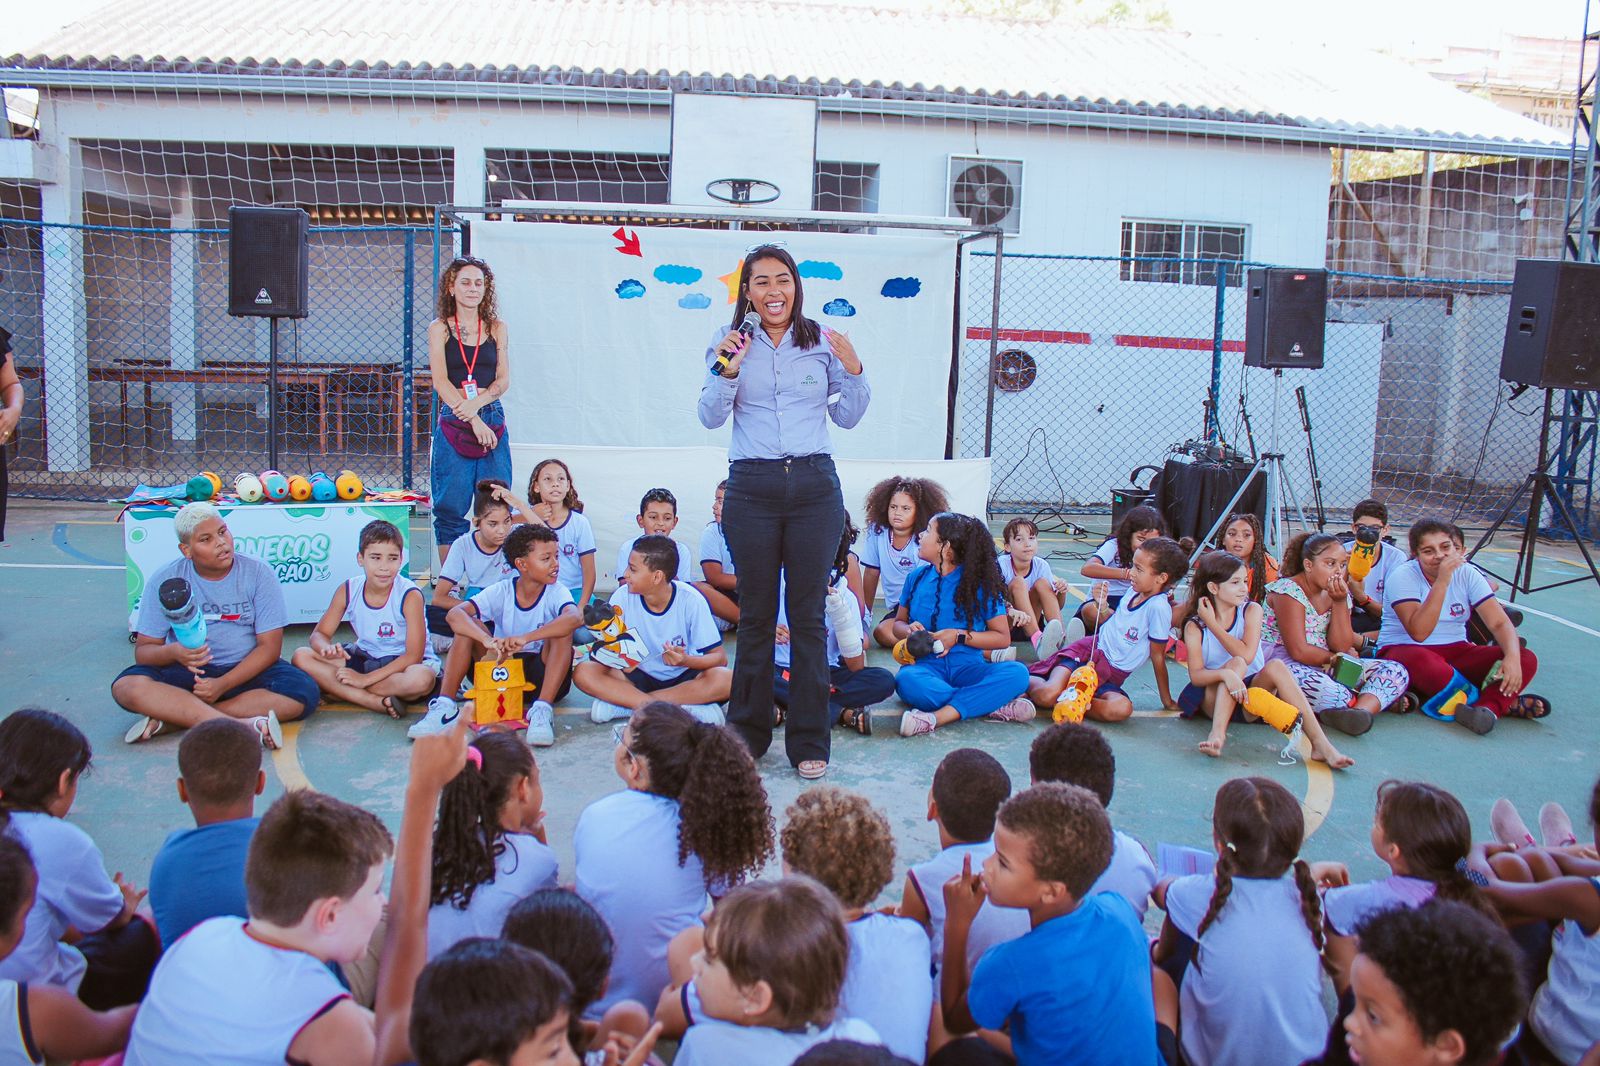 Oficinas de teatro de bonecos abordaram temas sobre sustentabilidade em Aracruz (ES)